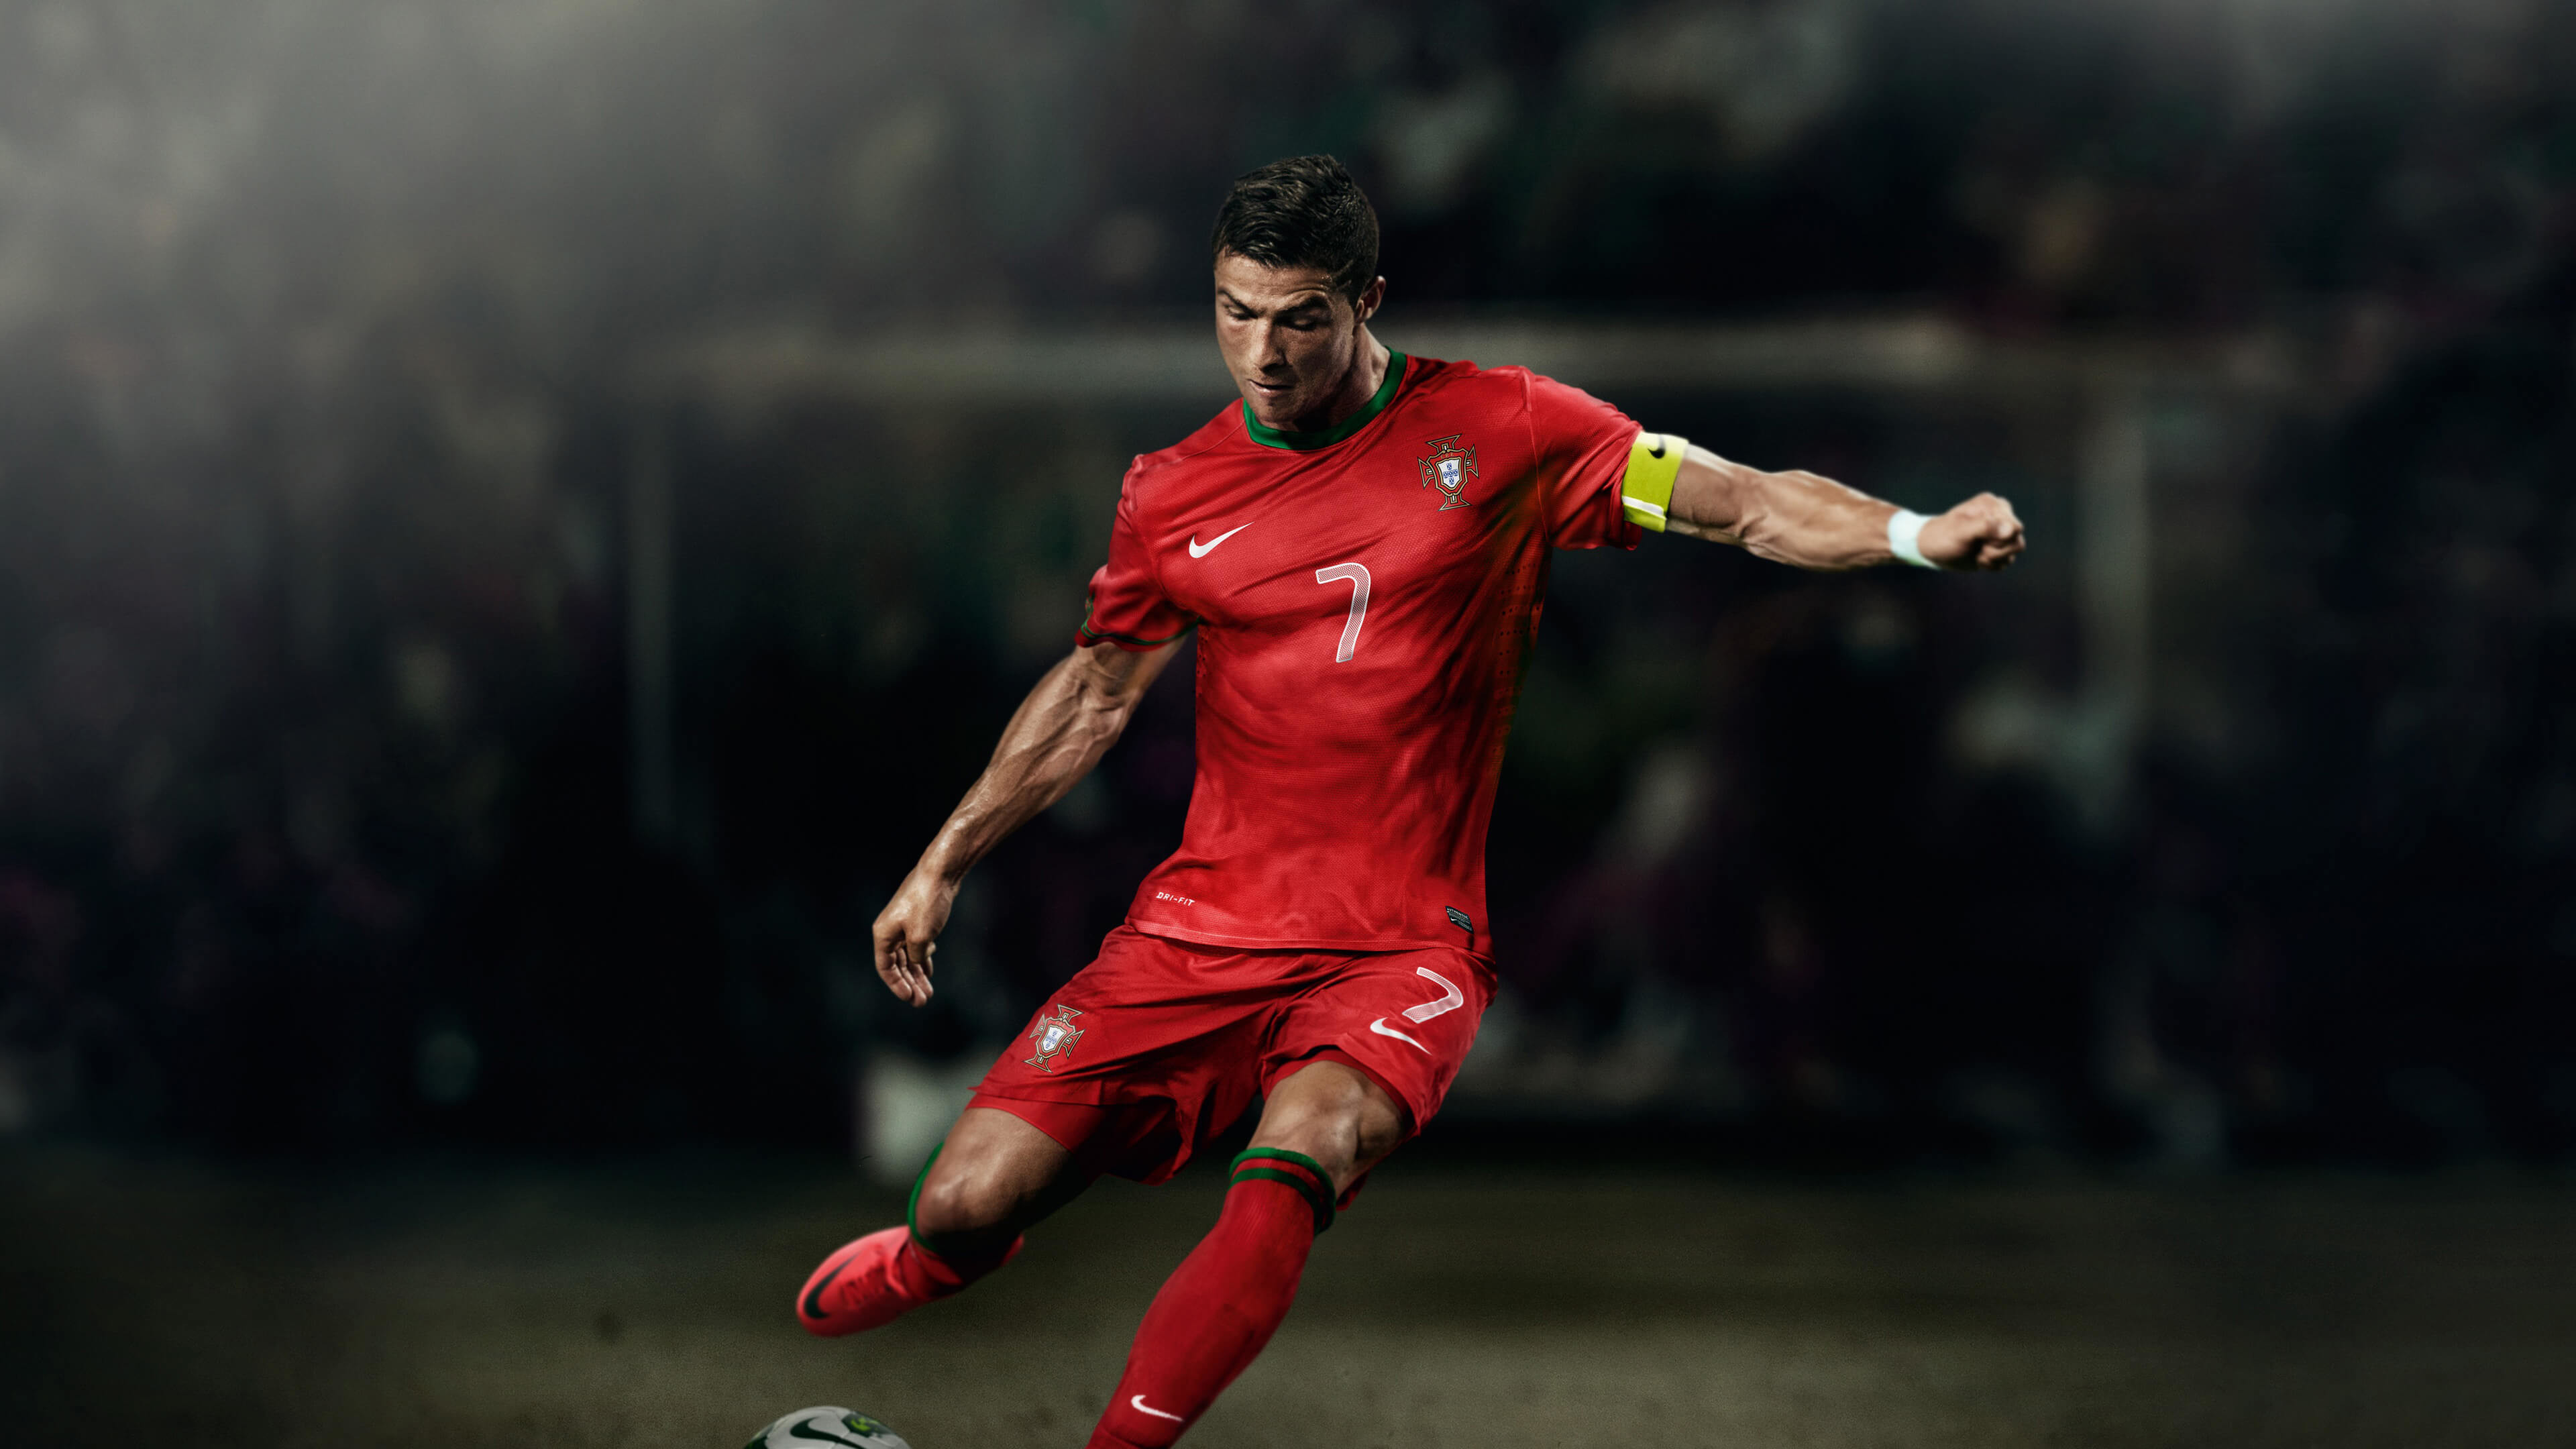 3840x2160 Cristiano Ronaldo, Soccer, Football player, 4K